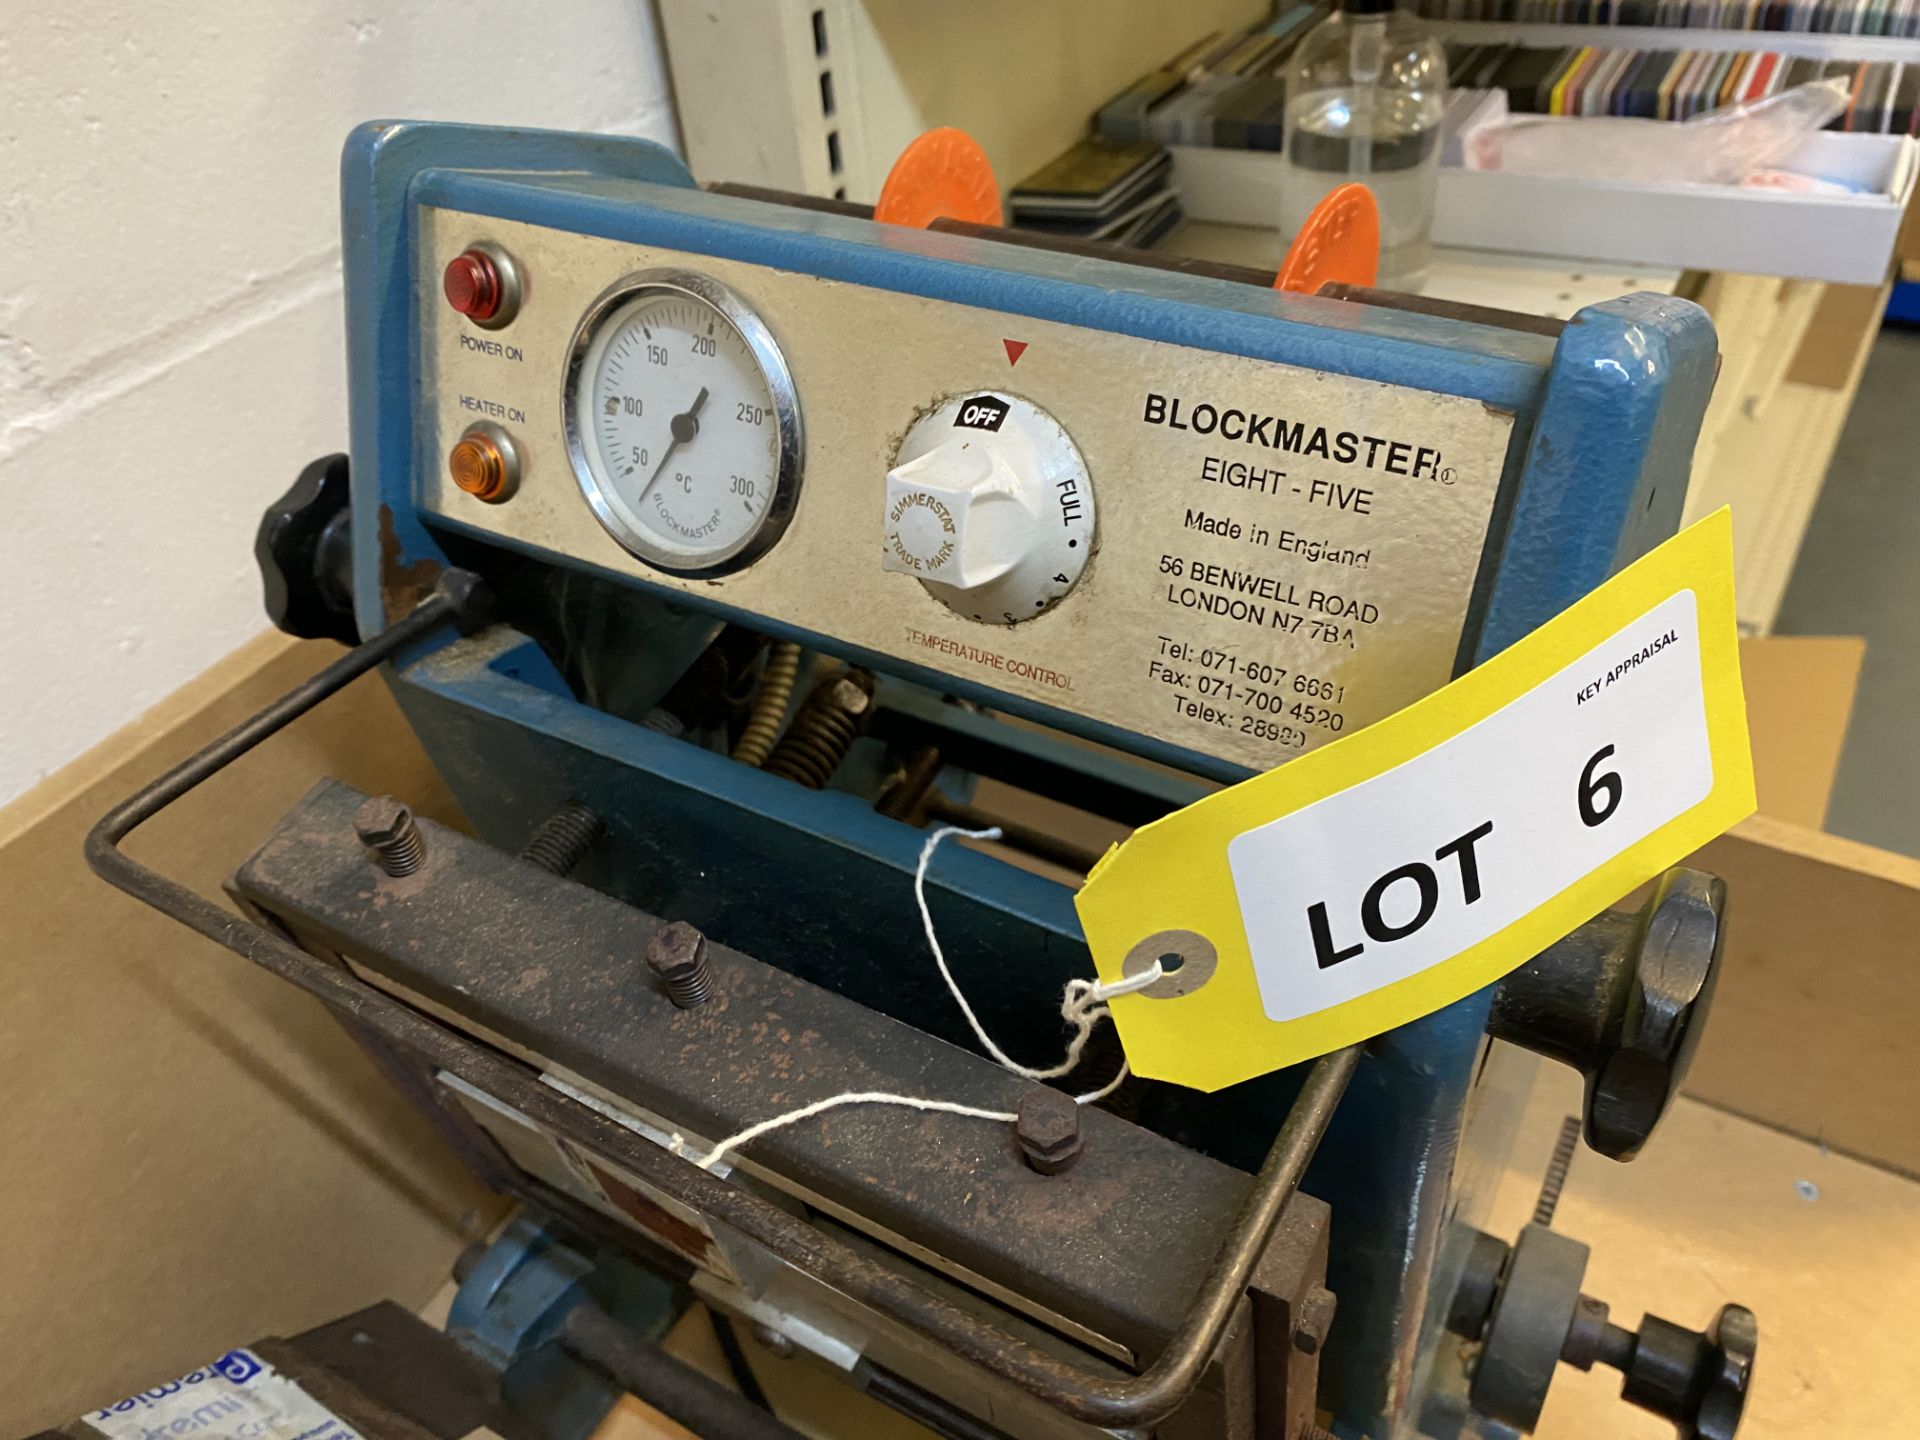 Blockmaster Eight-Five 8 x 5 manual hot foil stamping press, serial No: 1460